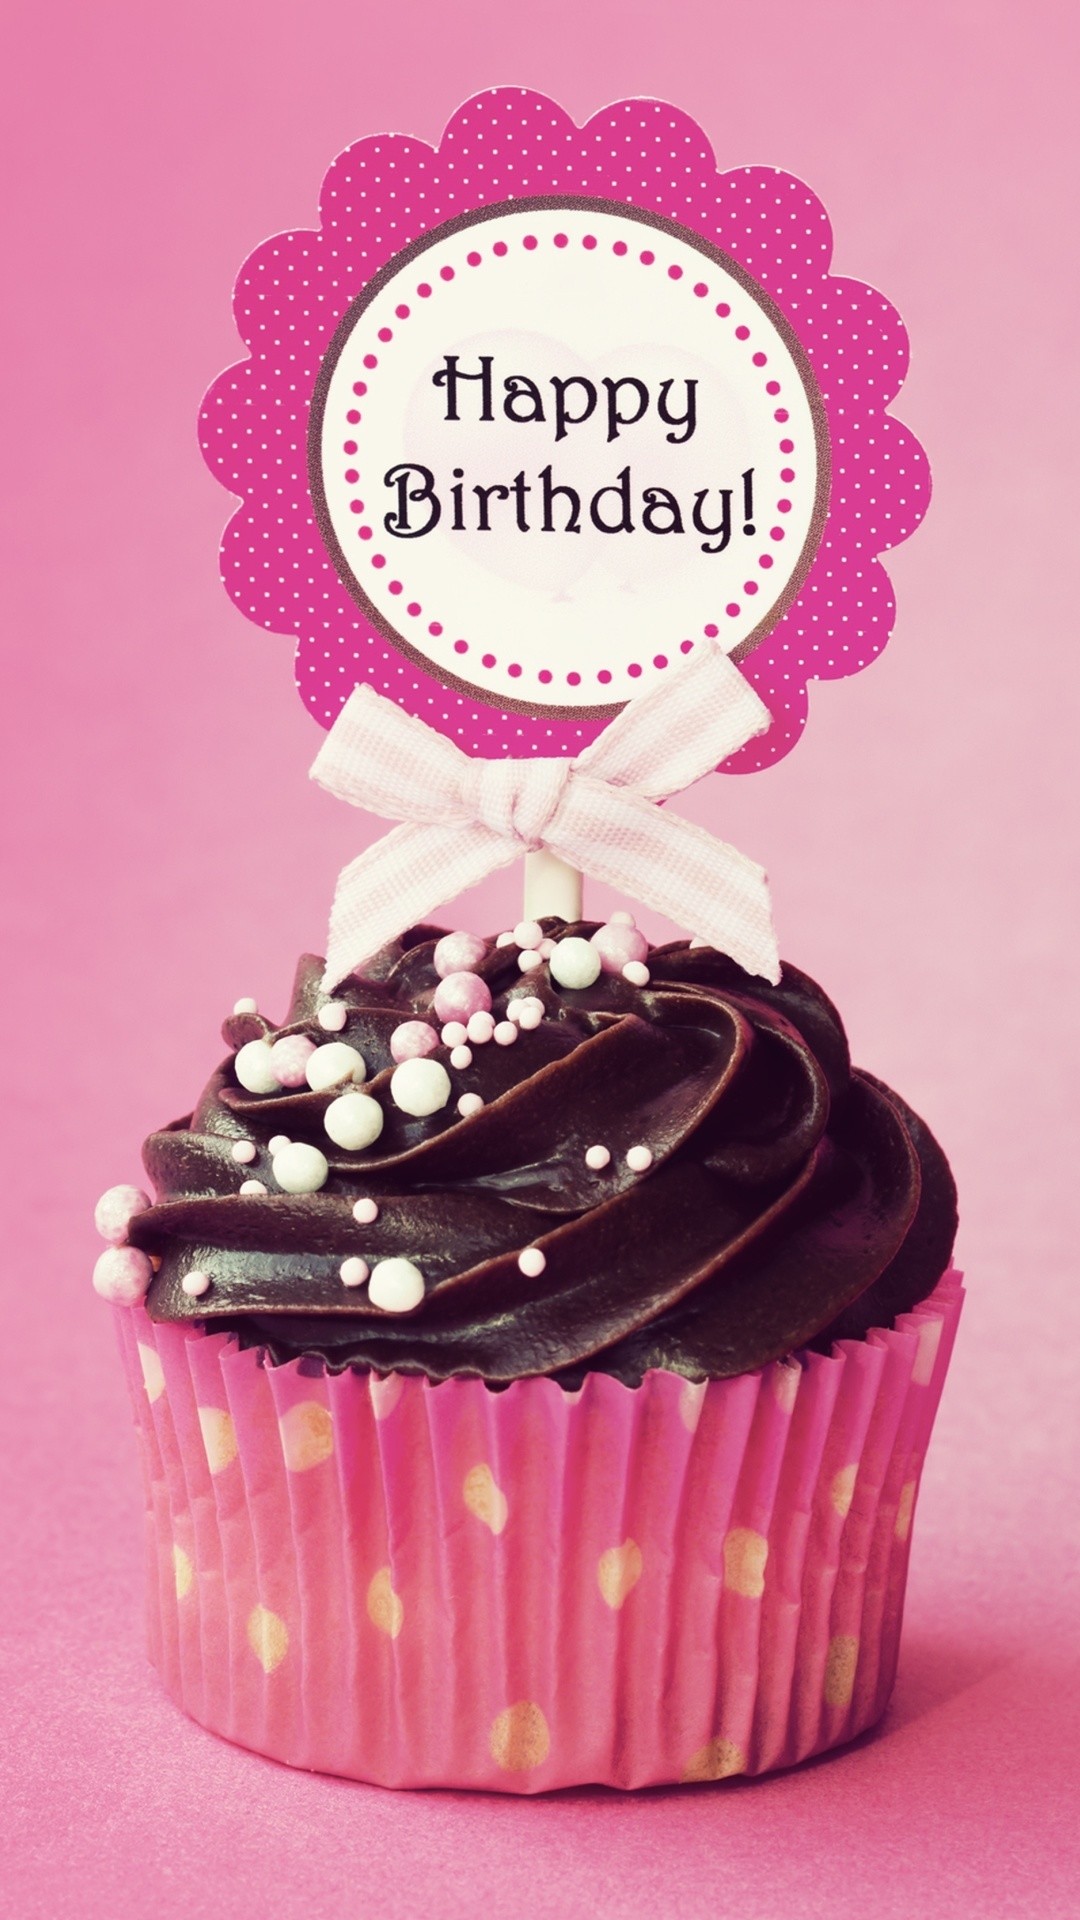 1080x1920 Happy Birthday Cupcake